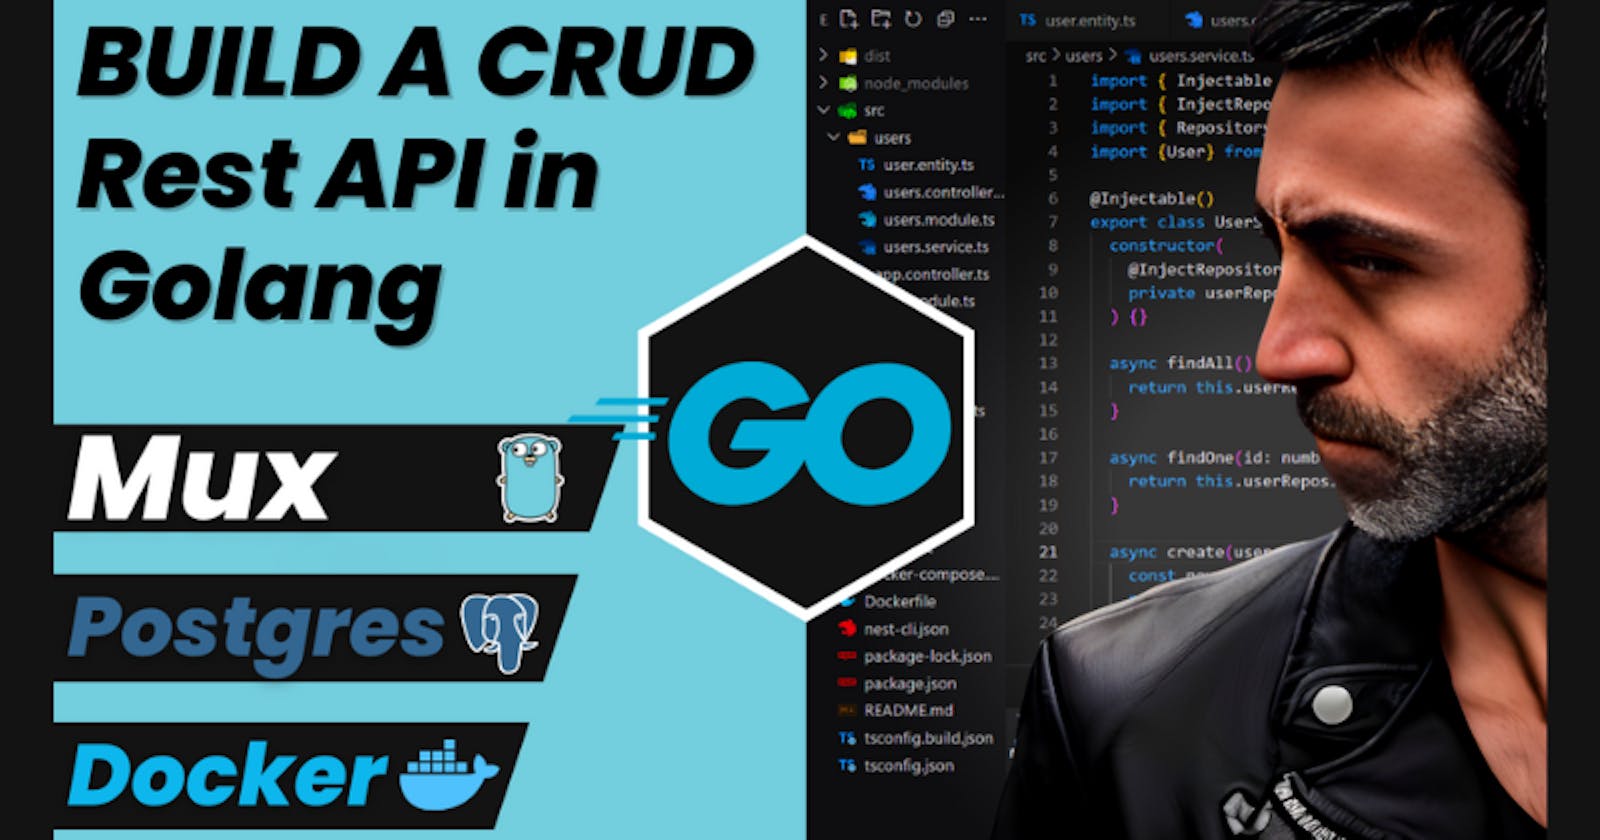 GO CRUD Rest API using Mux, Postgres, Docker, and Docker Compose